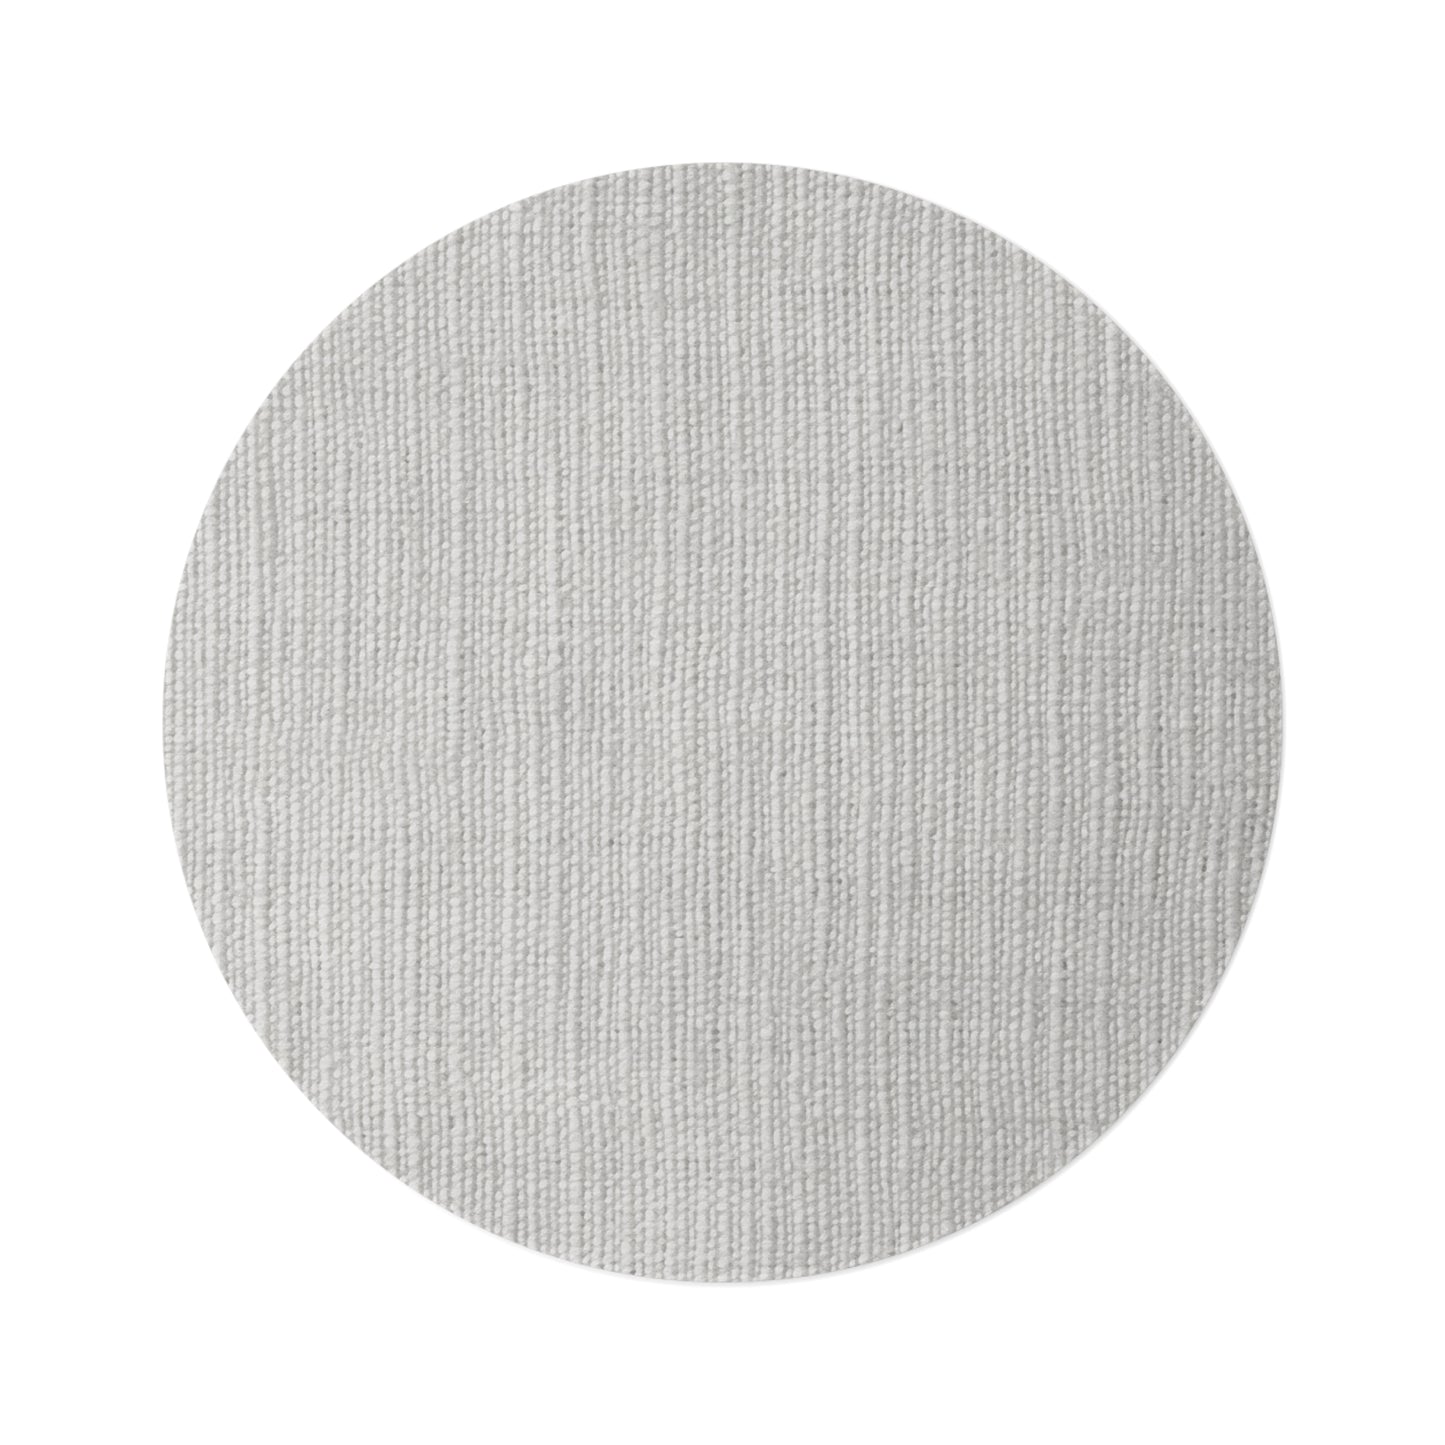 Chic White Denim-Style Fabric, Luxurious & Stylish Material - Round Rug